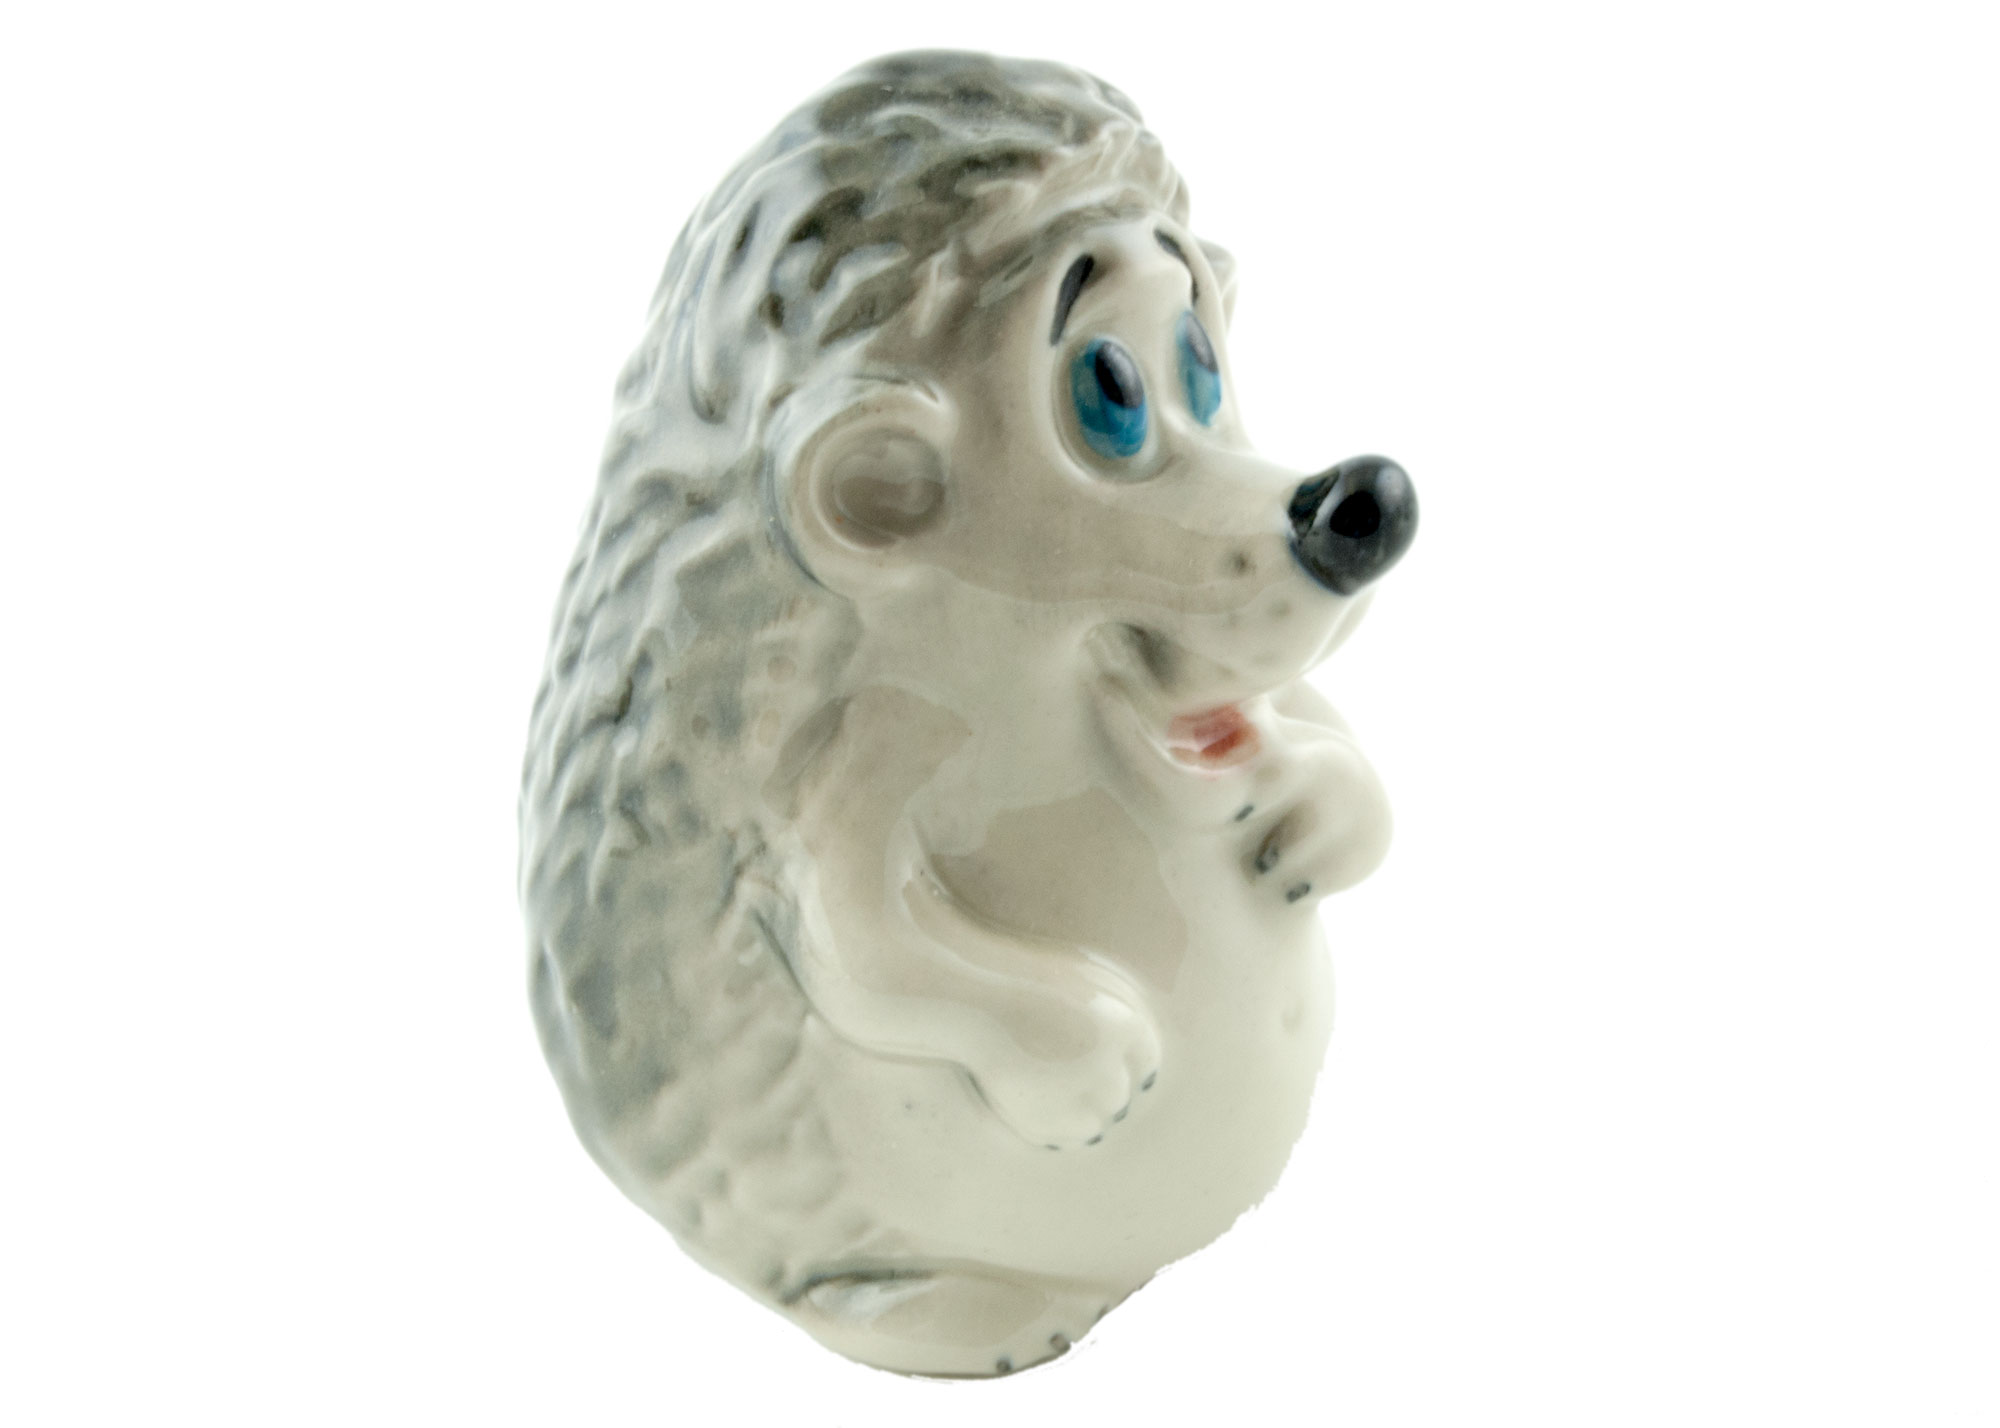 Buy Happy Hedgehog Porcelain Figurine at GoldenCockerel.com